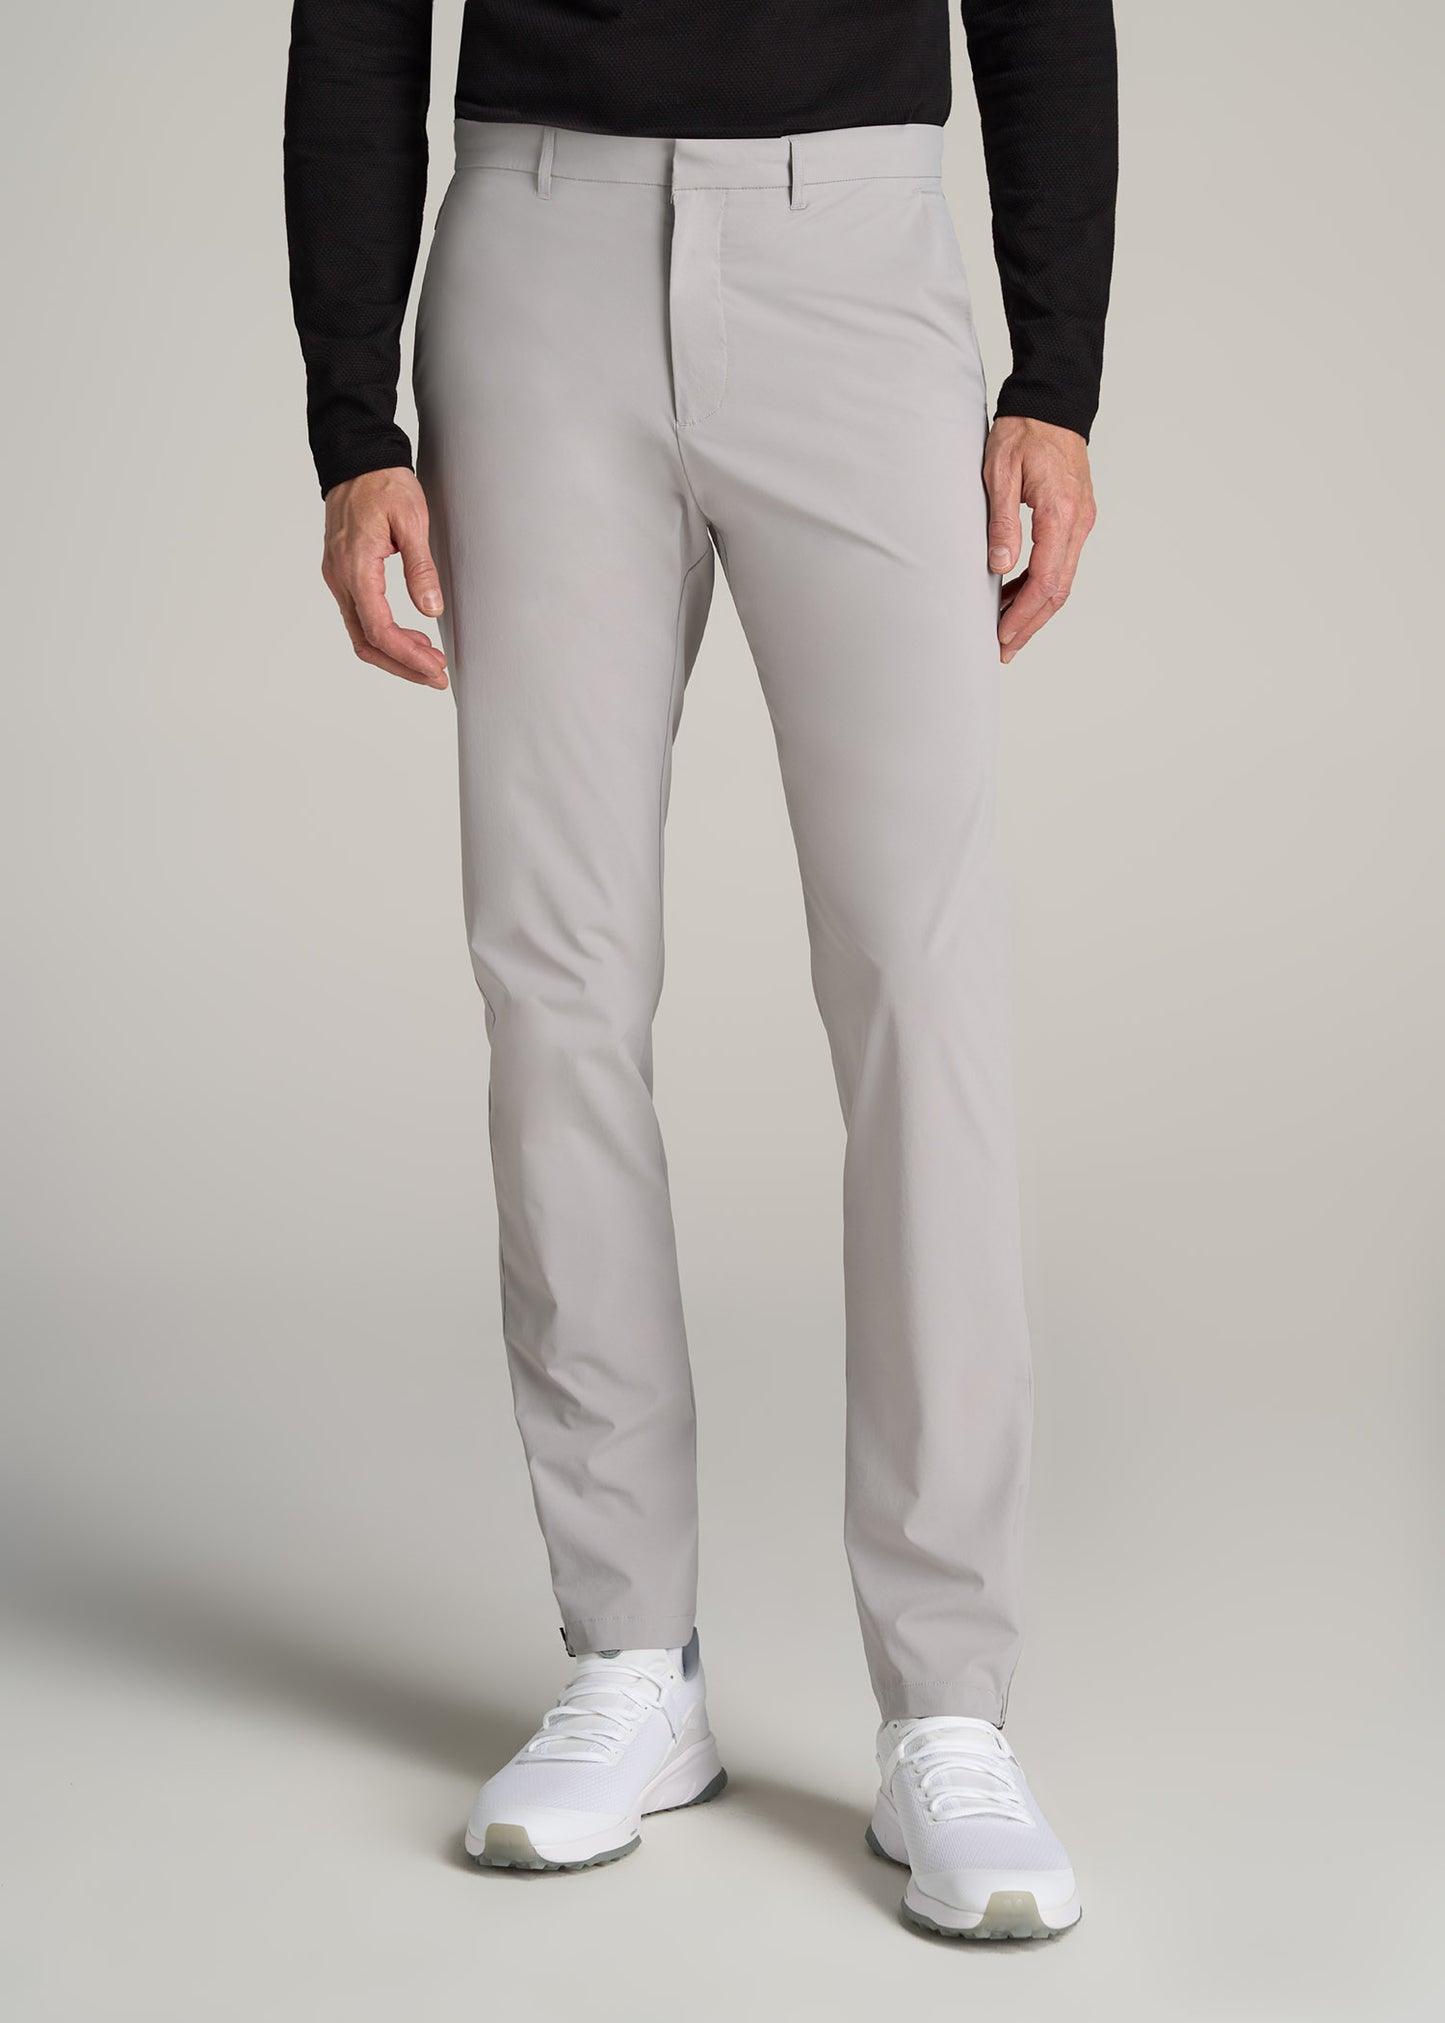 Grey Grid Pants Men - Plaid Chino Pants